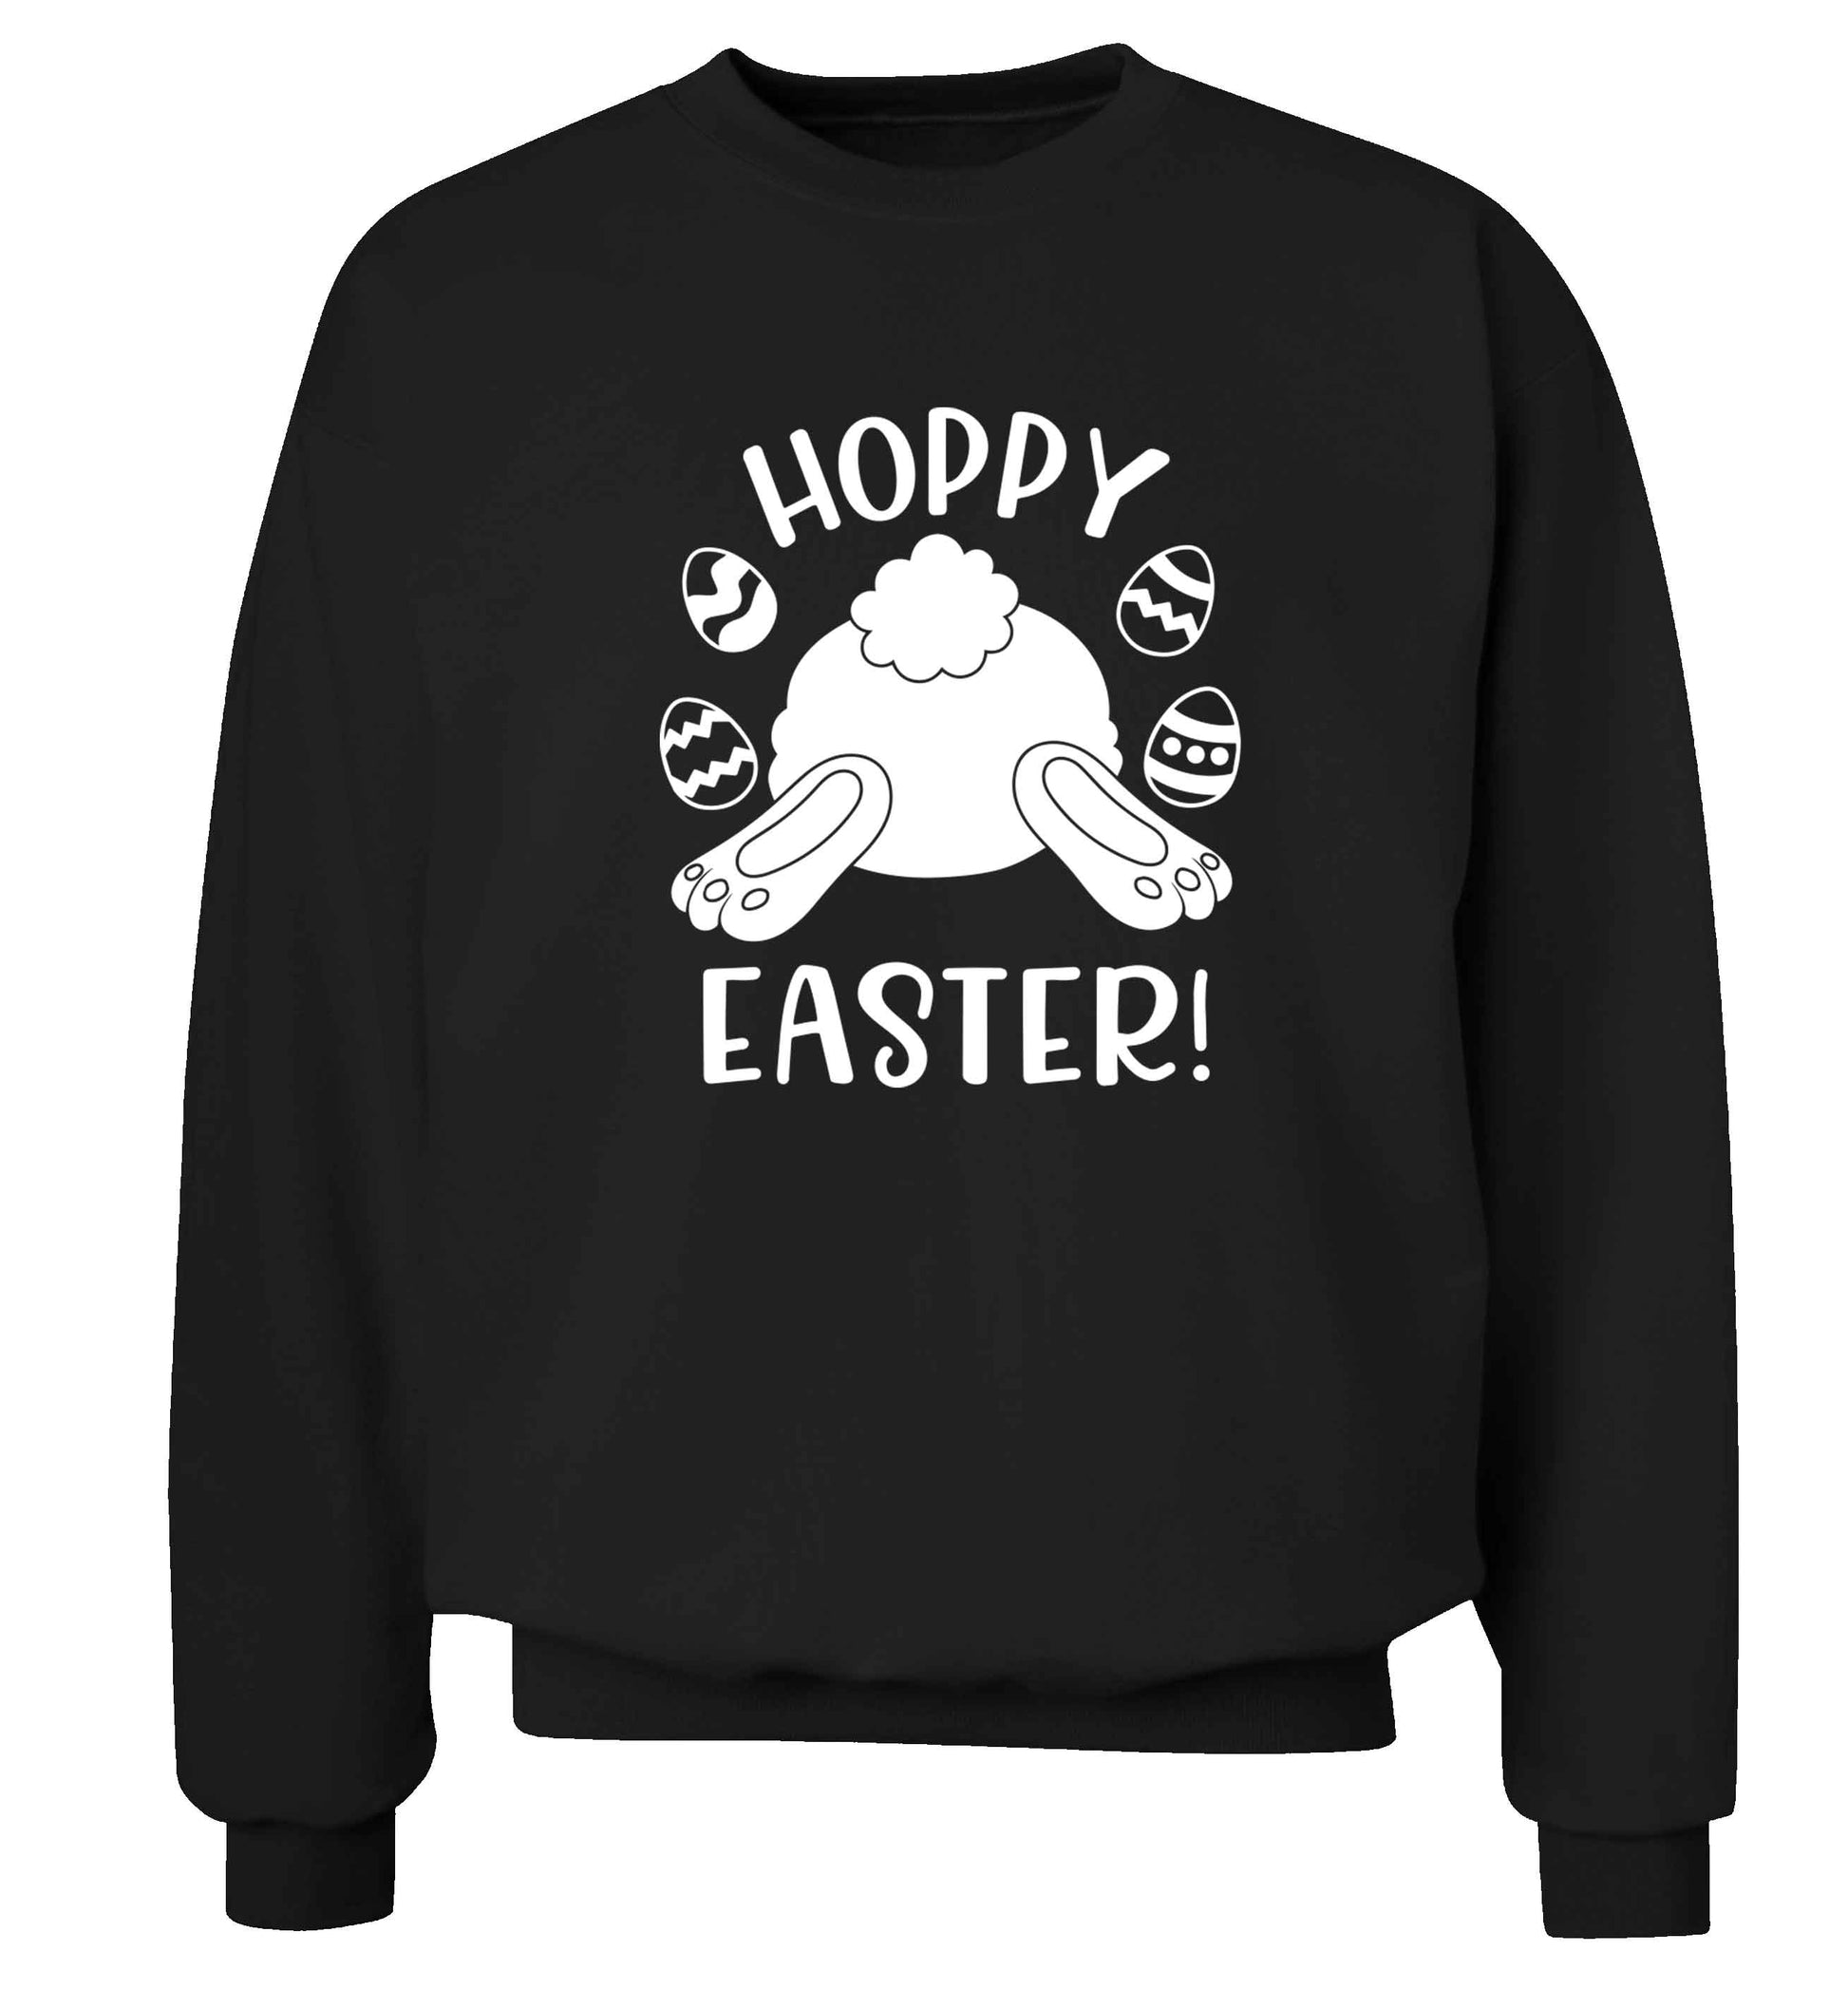 Hoppy Easter adult's unisex black sweater 2XL